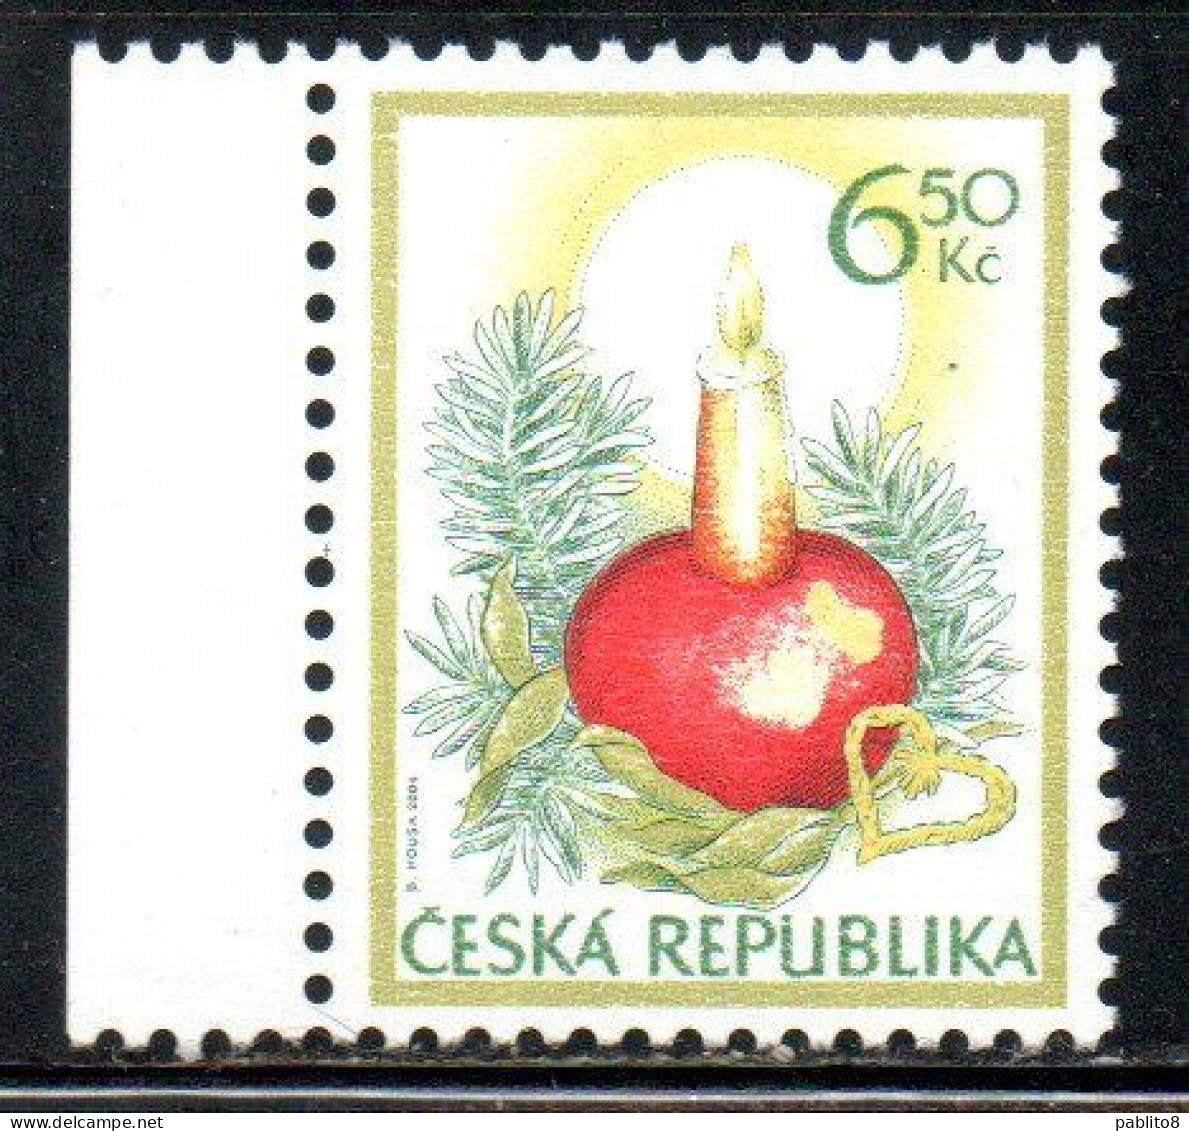 CZECH REPUBLIC CECA REPUBBLICA CZECHOSLOVAKIA 2004 CHRISTMAS NATALE NOEL WEIHNACHTEN NAVIDAD 6.50k MNH - Nuevos